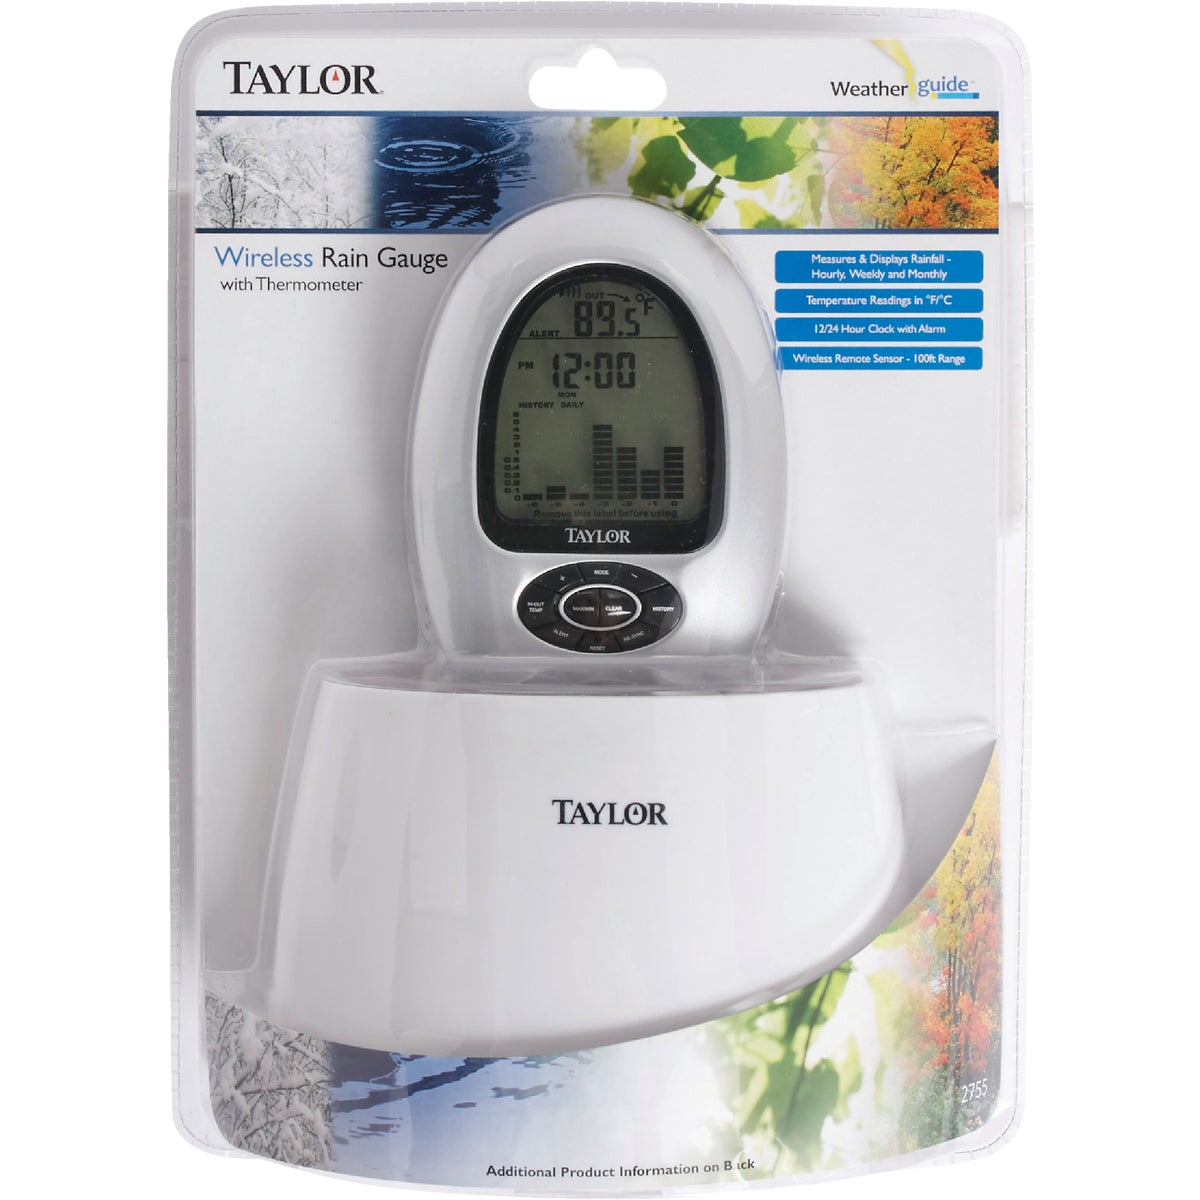 Item 602369, Digital, wireless thermometer has indoor temperature range of 32 to 122 